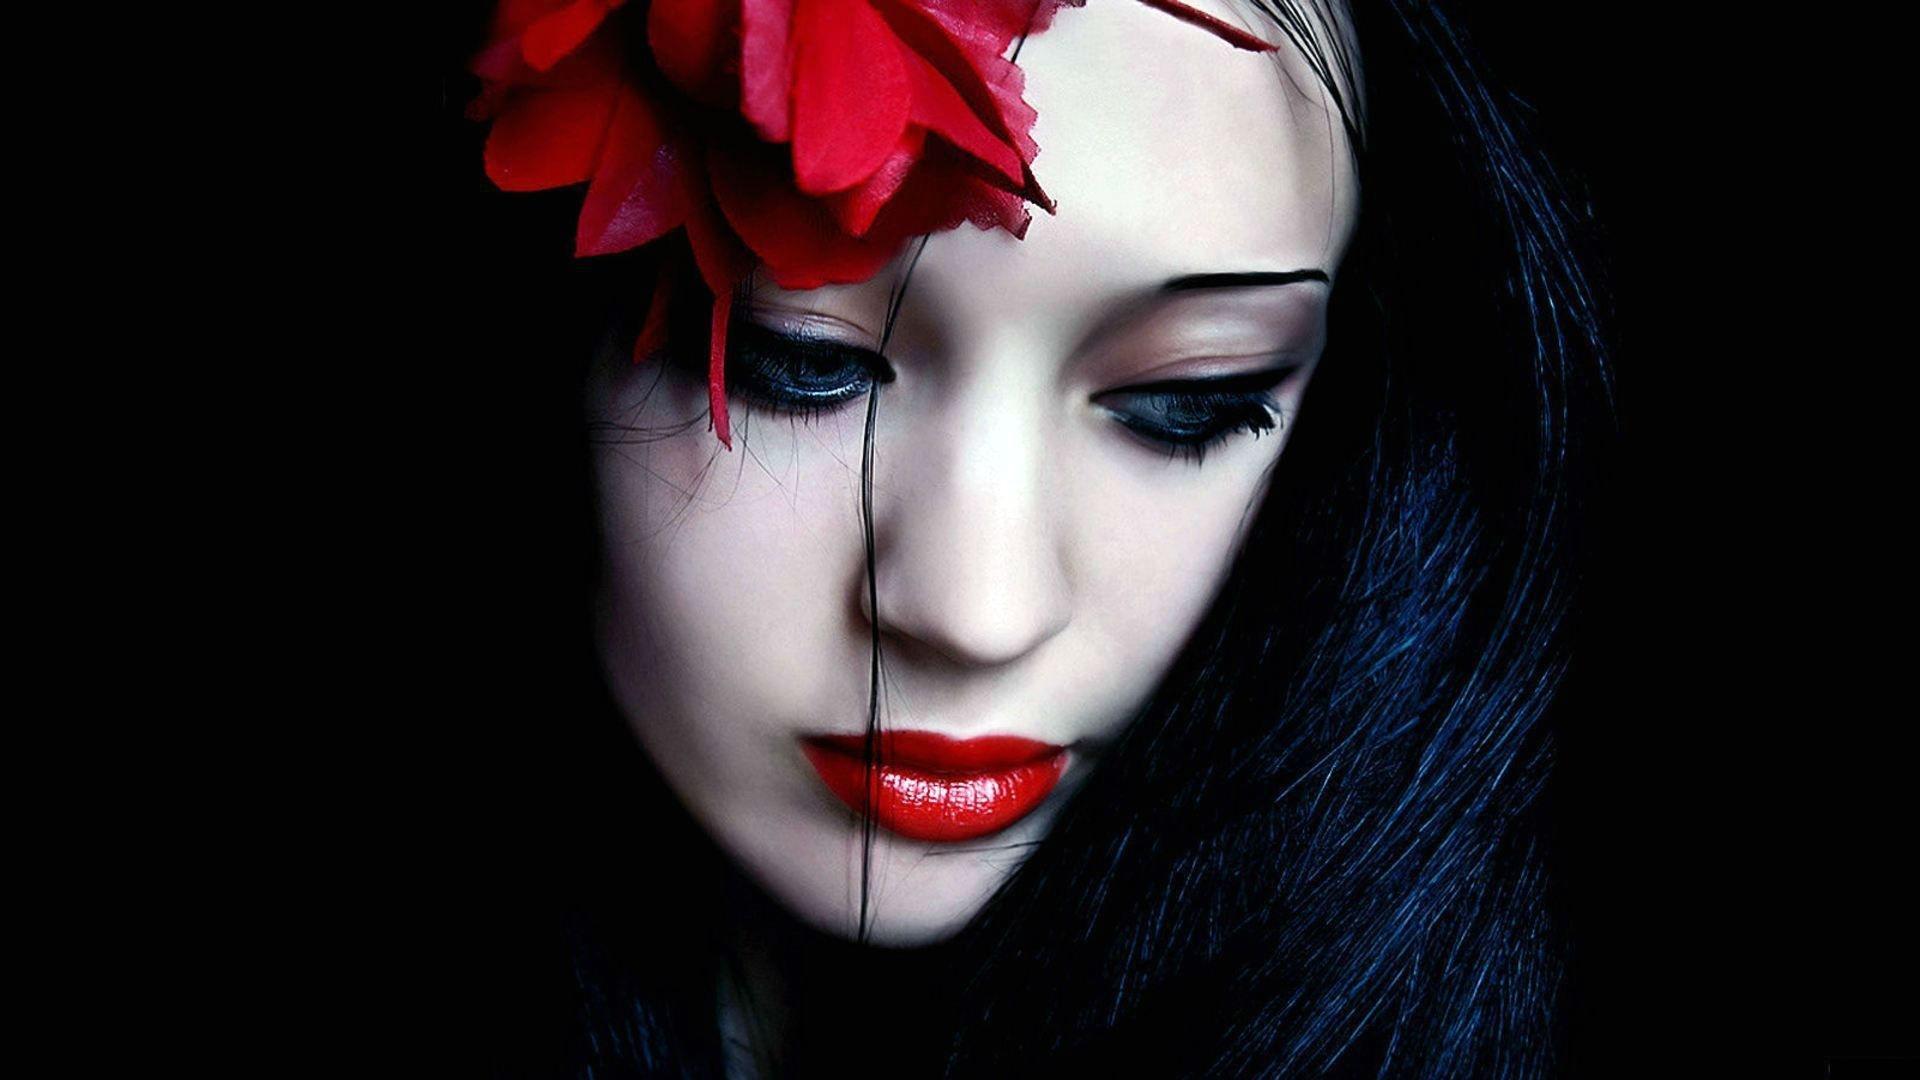 Women females girls gothic vampire face pale sad sorrow emotions red contrast dark wallpaperx1080